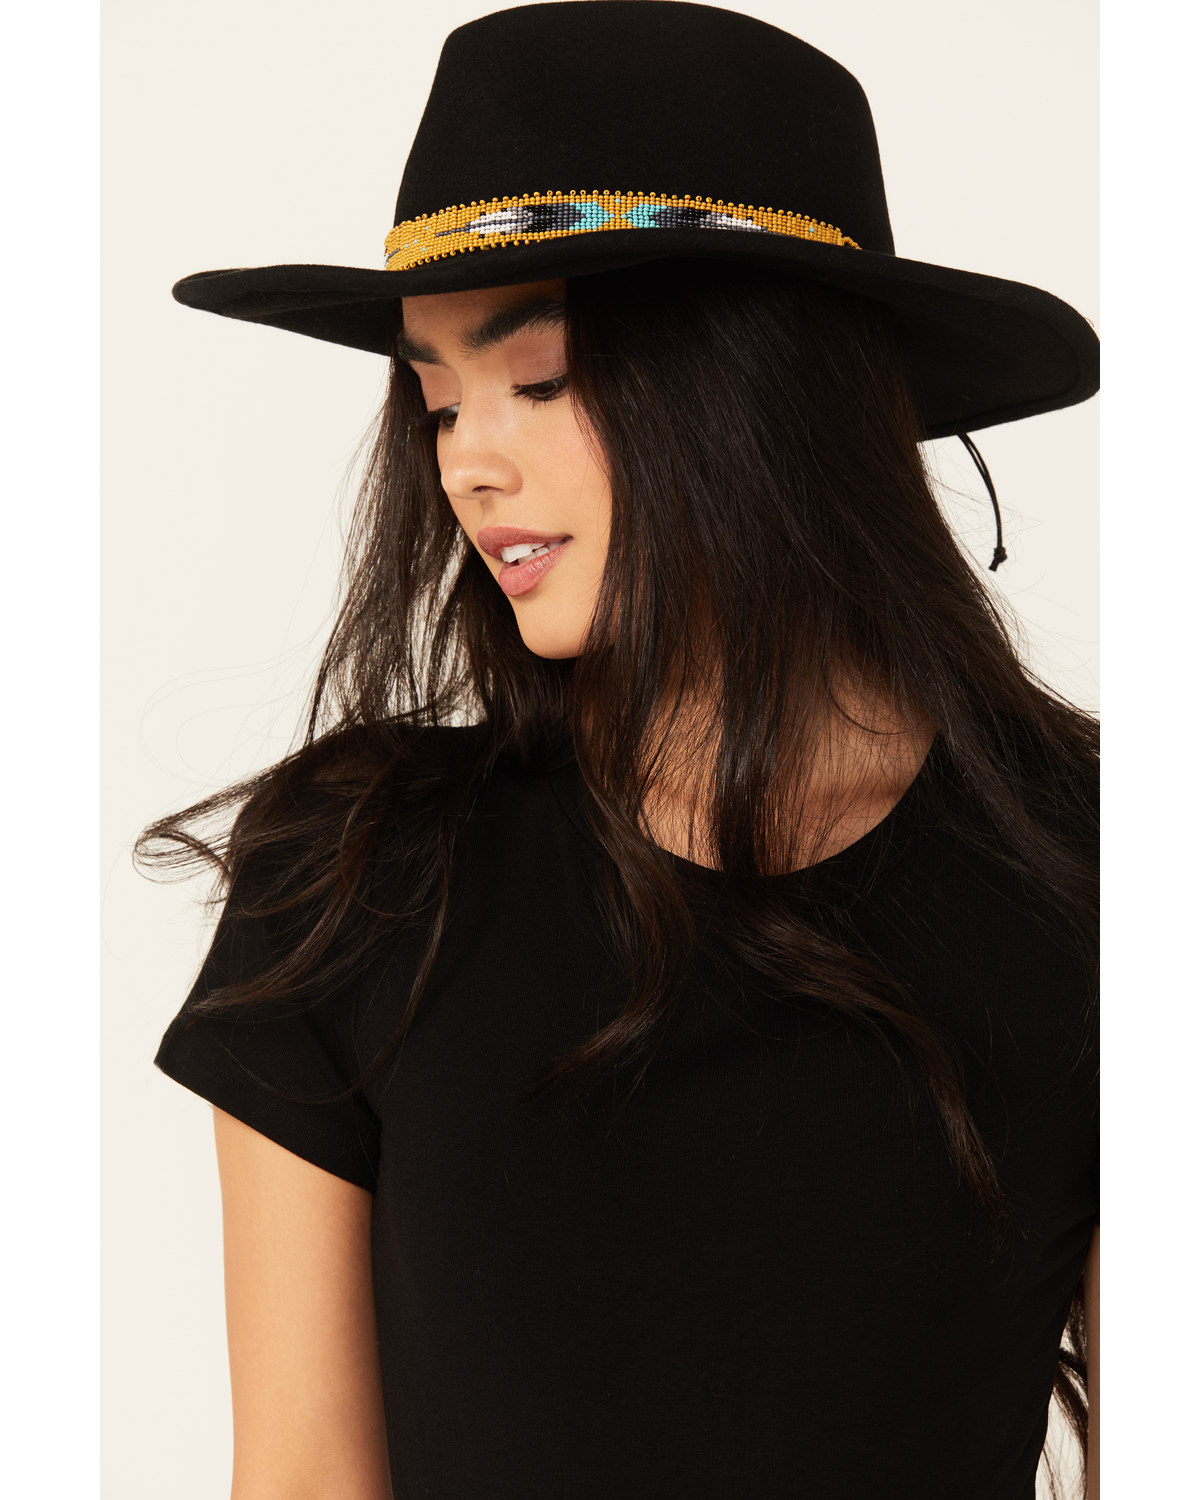 Nikki Beach Women's Two Feathers Felt Western Fashion Hat